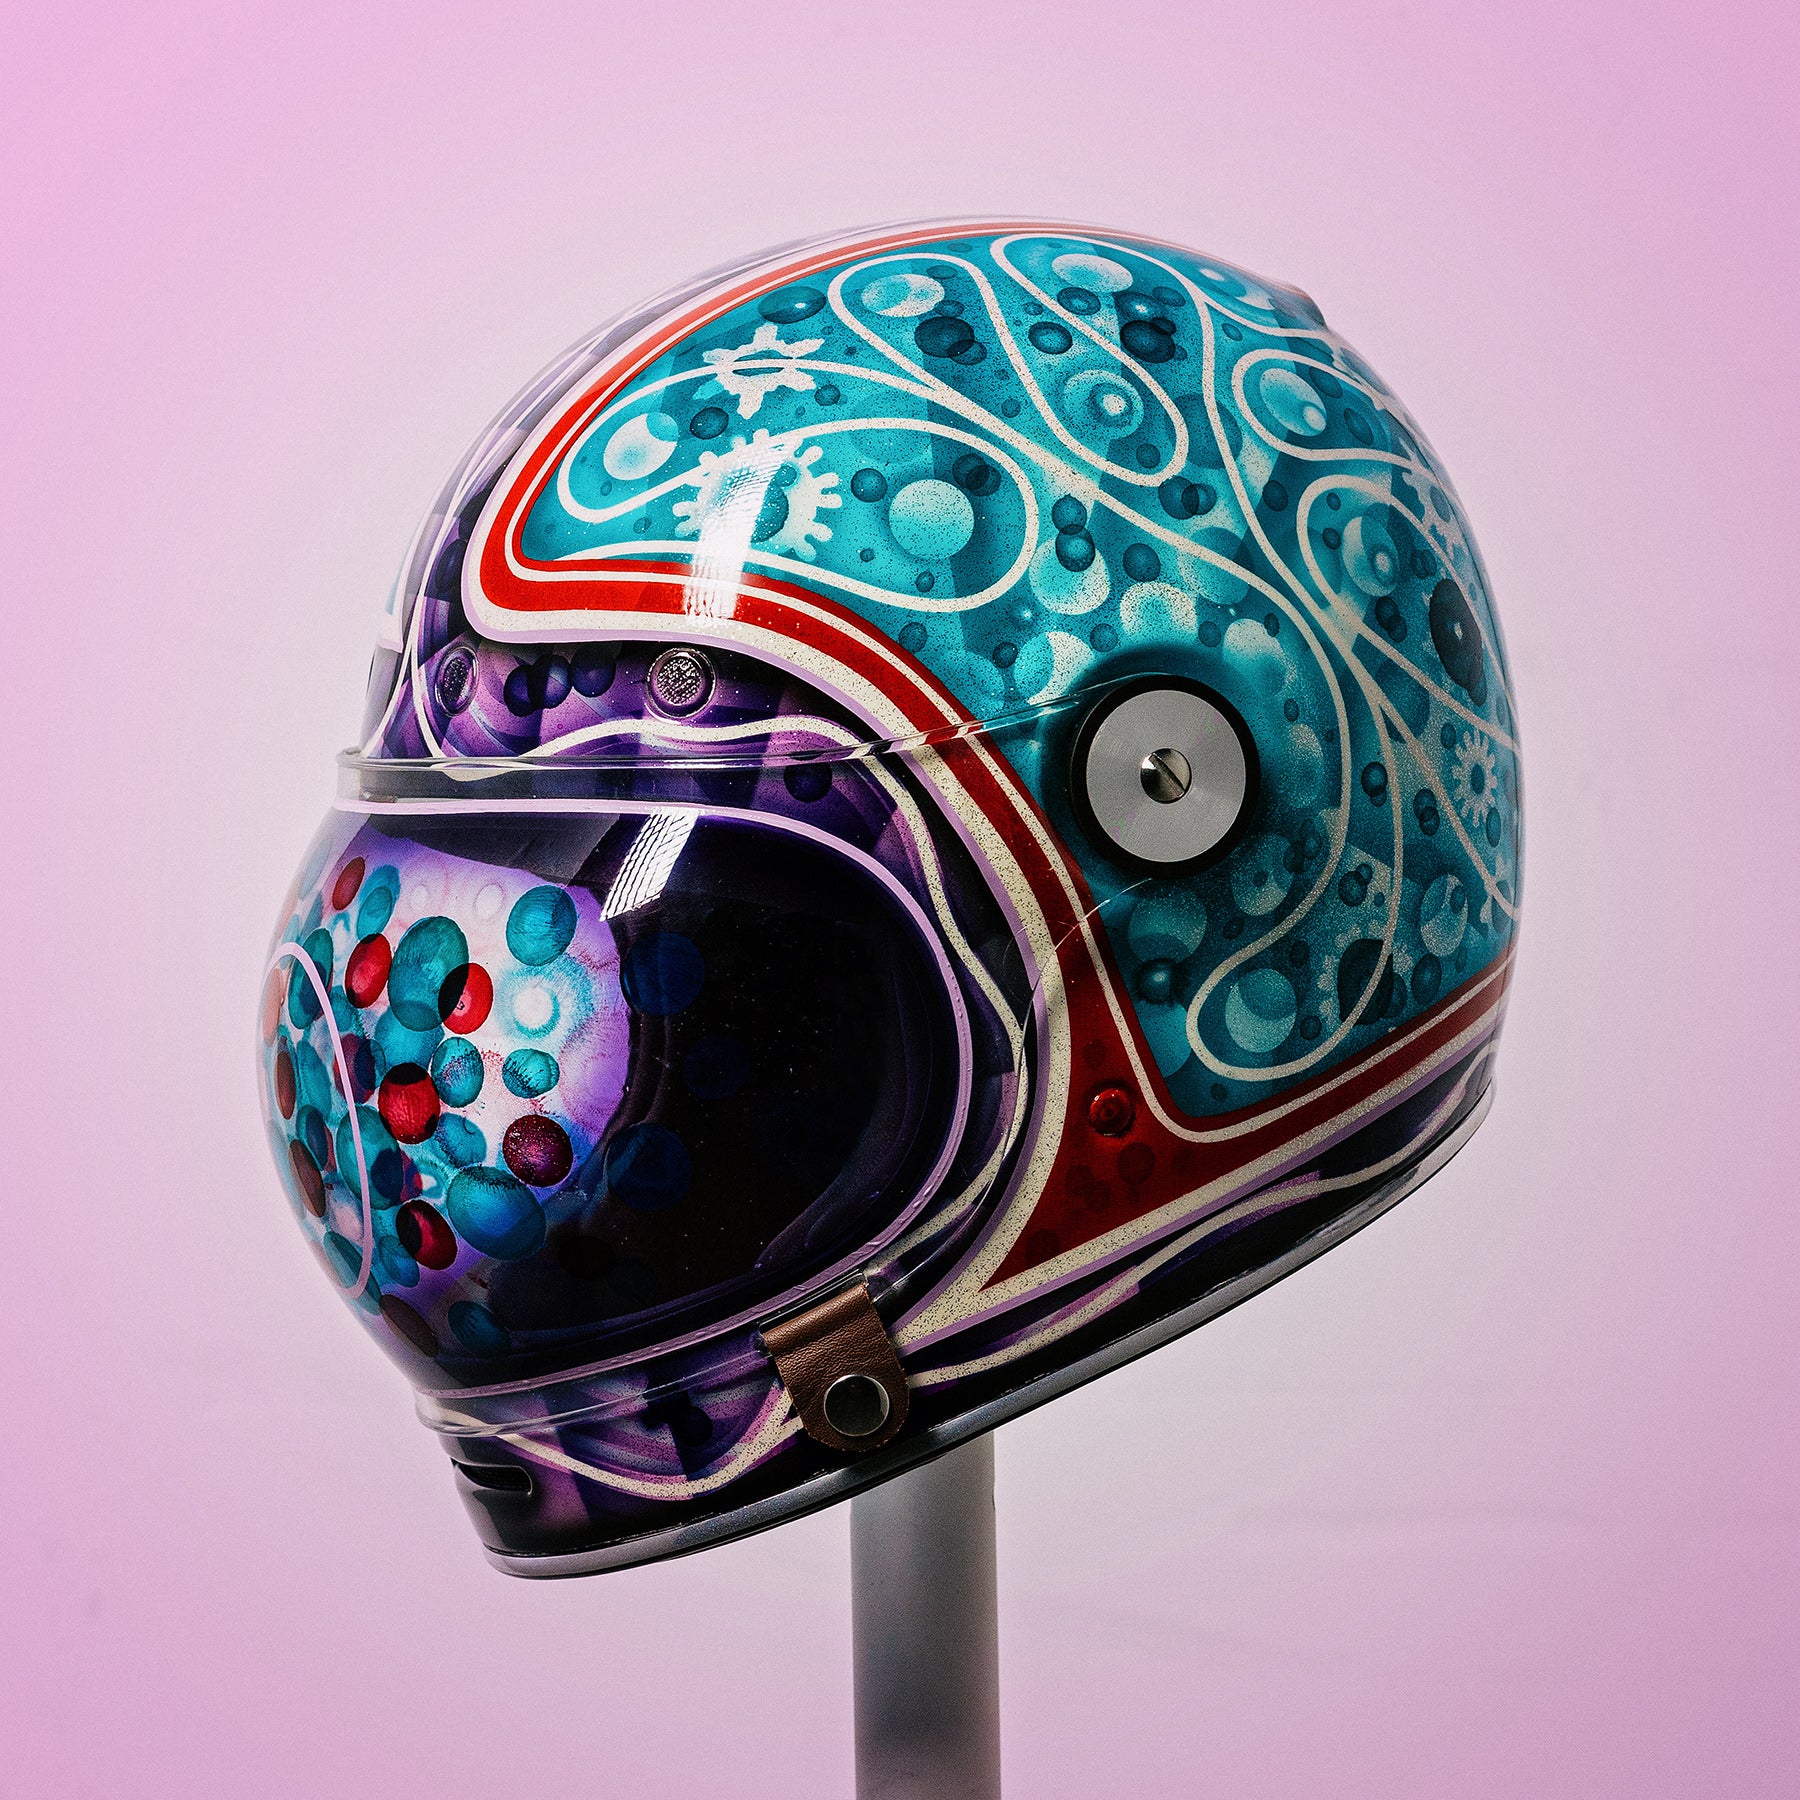 Trippy Ten helmet art show Pittsburgh Glory Daze motorcycle show Bell Helmets Skratch